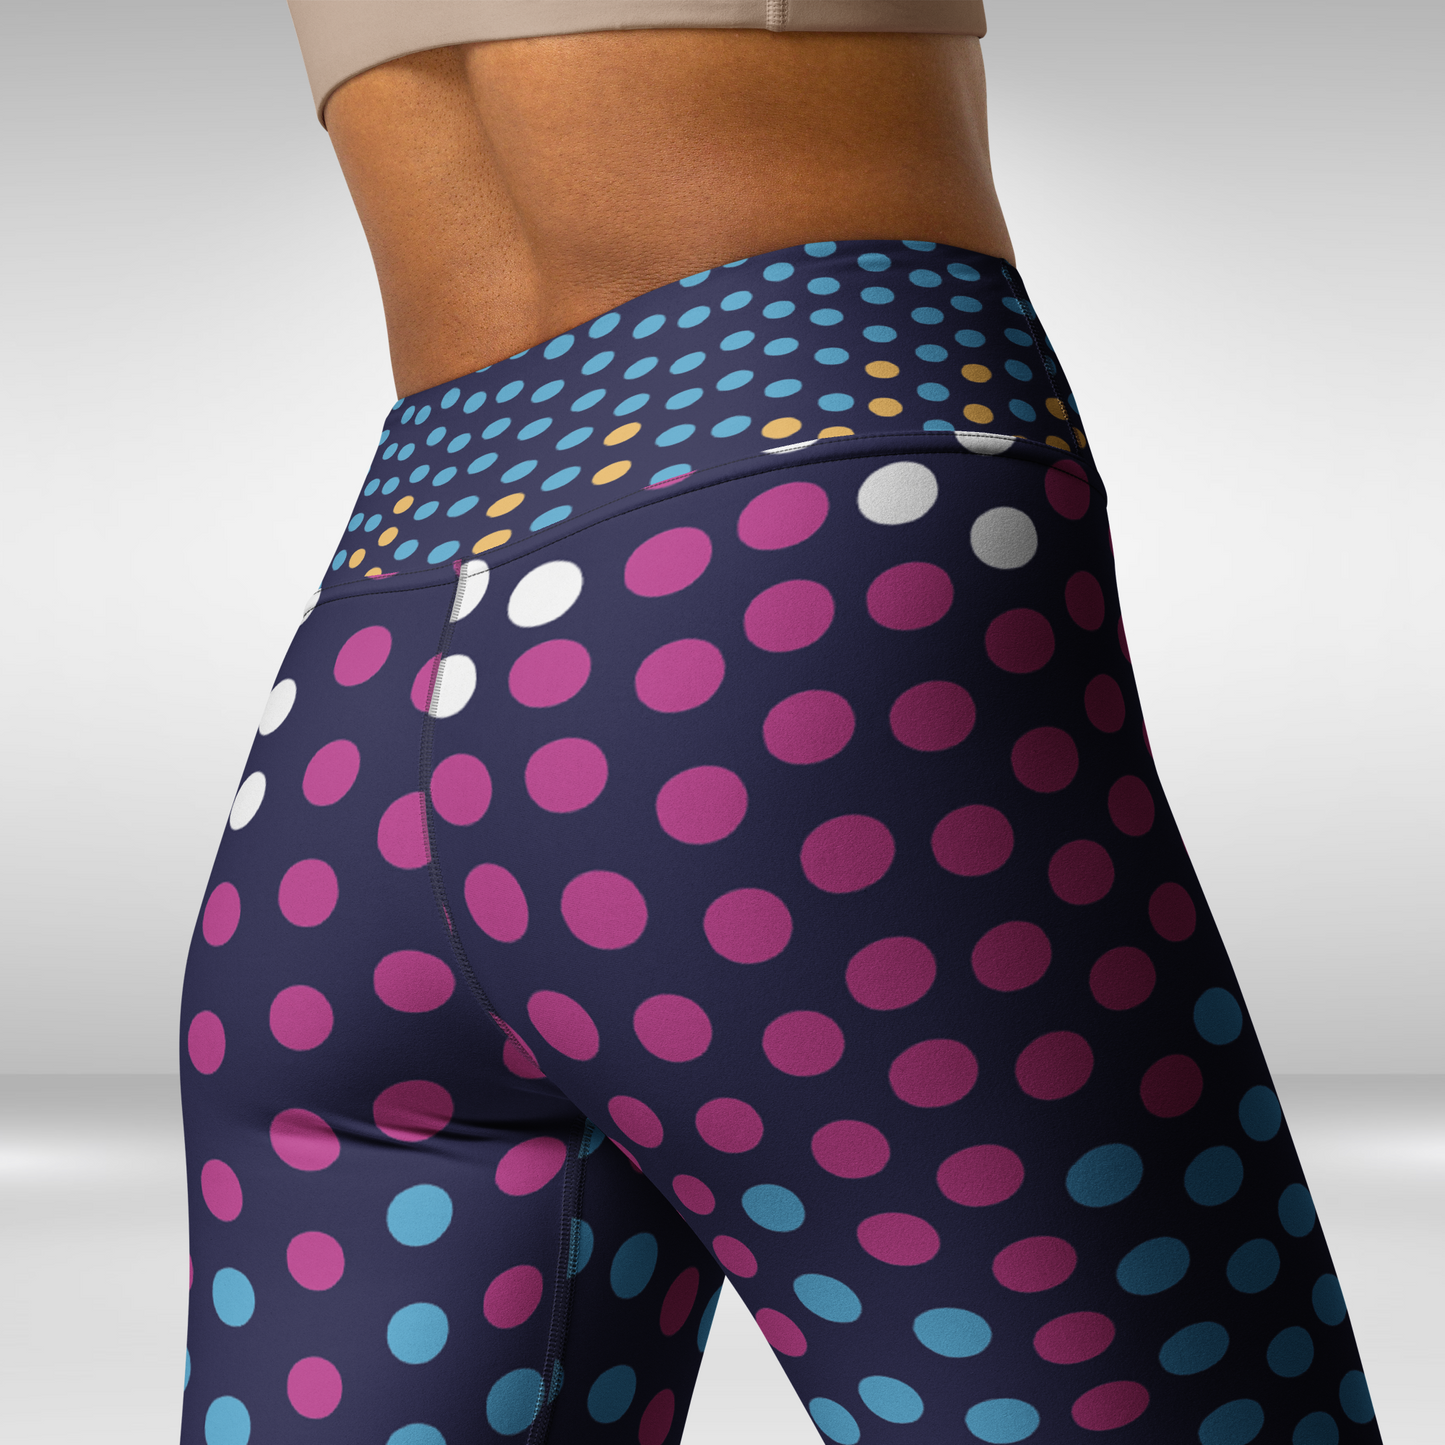 Women Yoga Legging - Pink and Blue Polka Dot Print